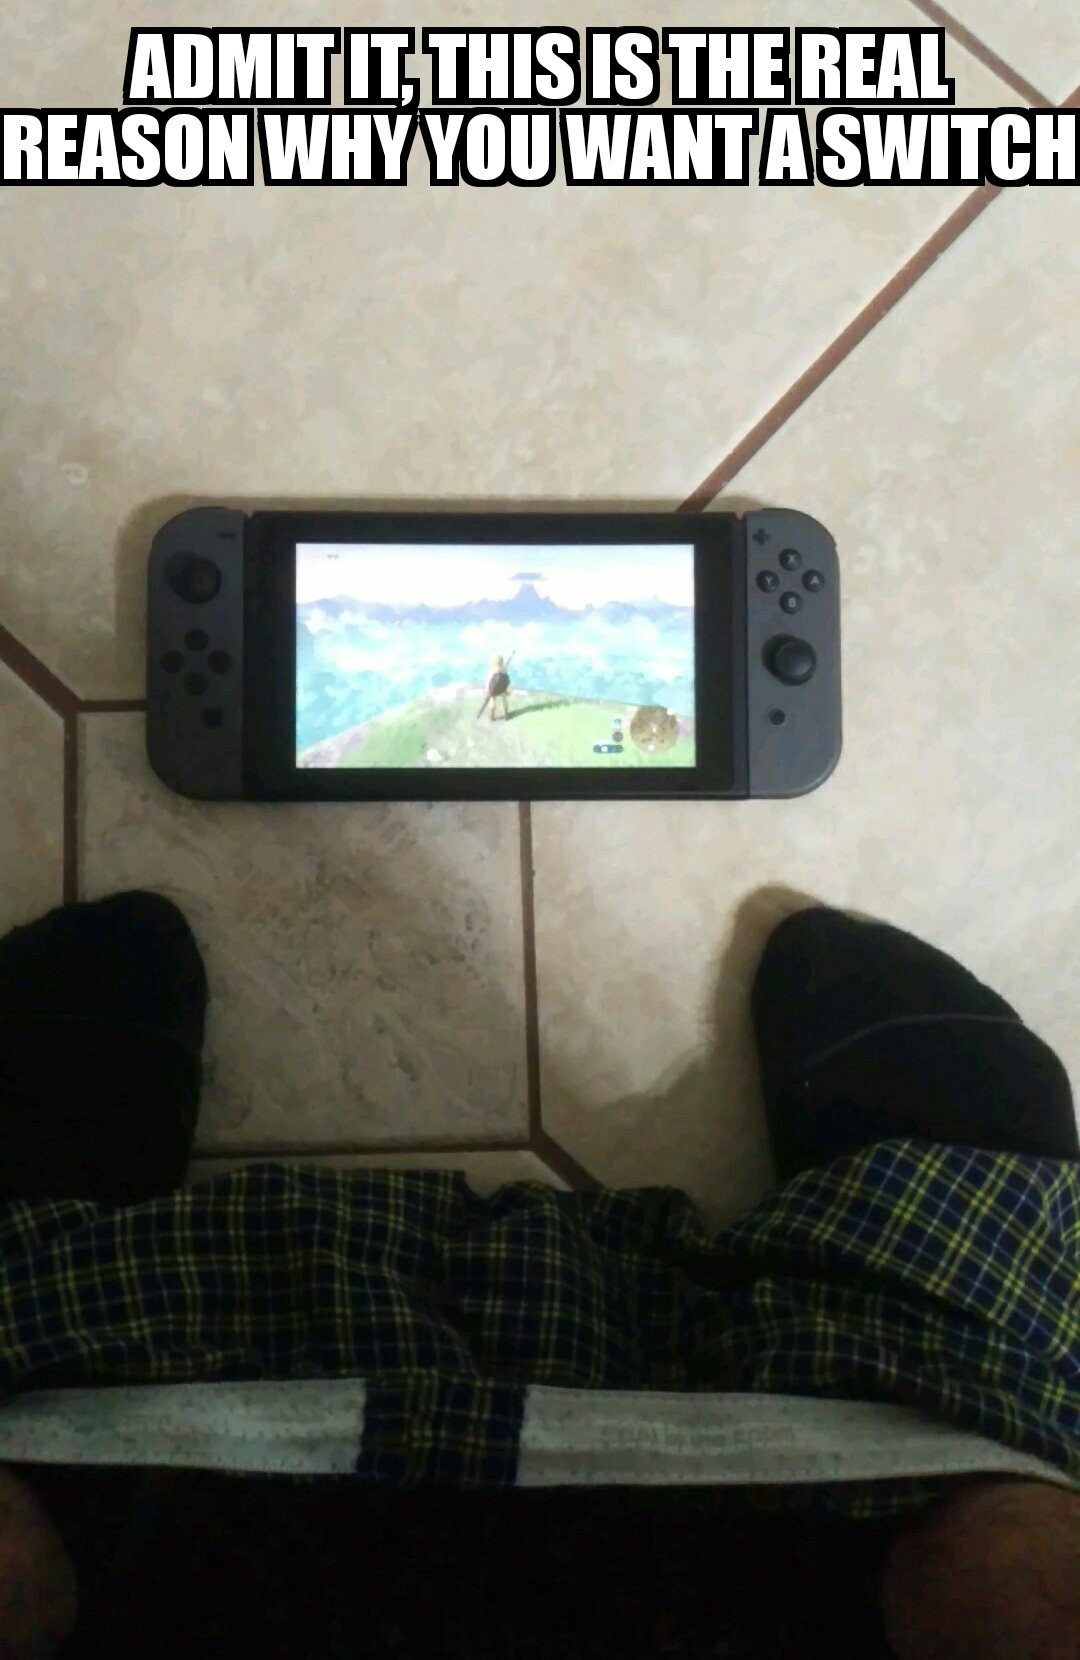 Nintendo Switch. - meme